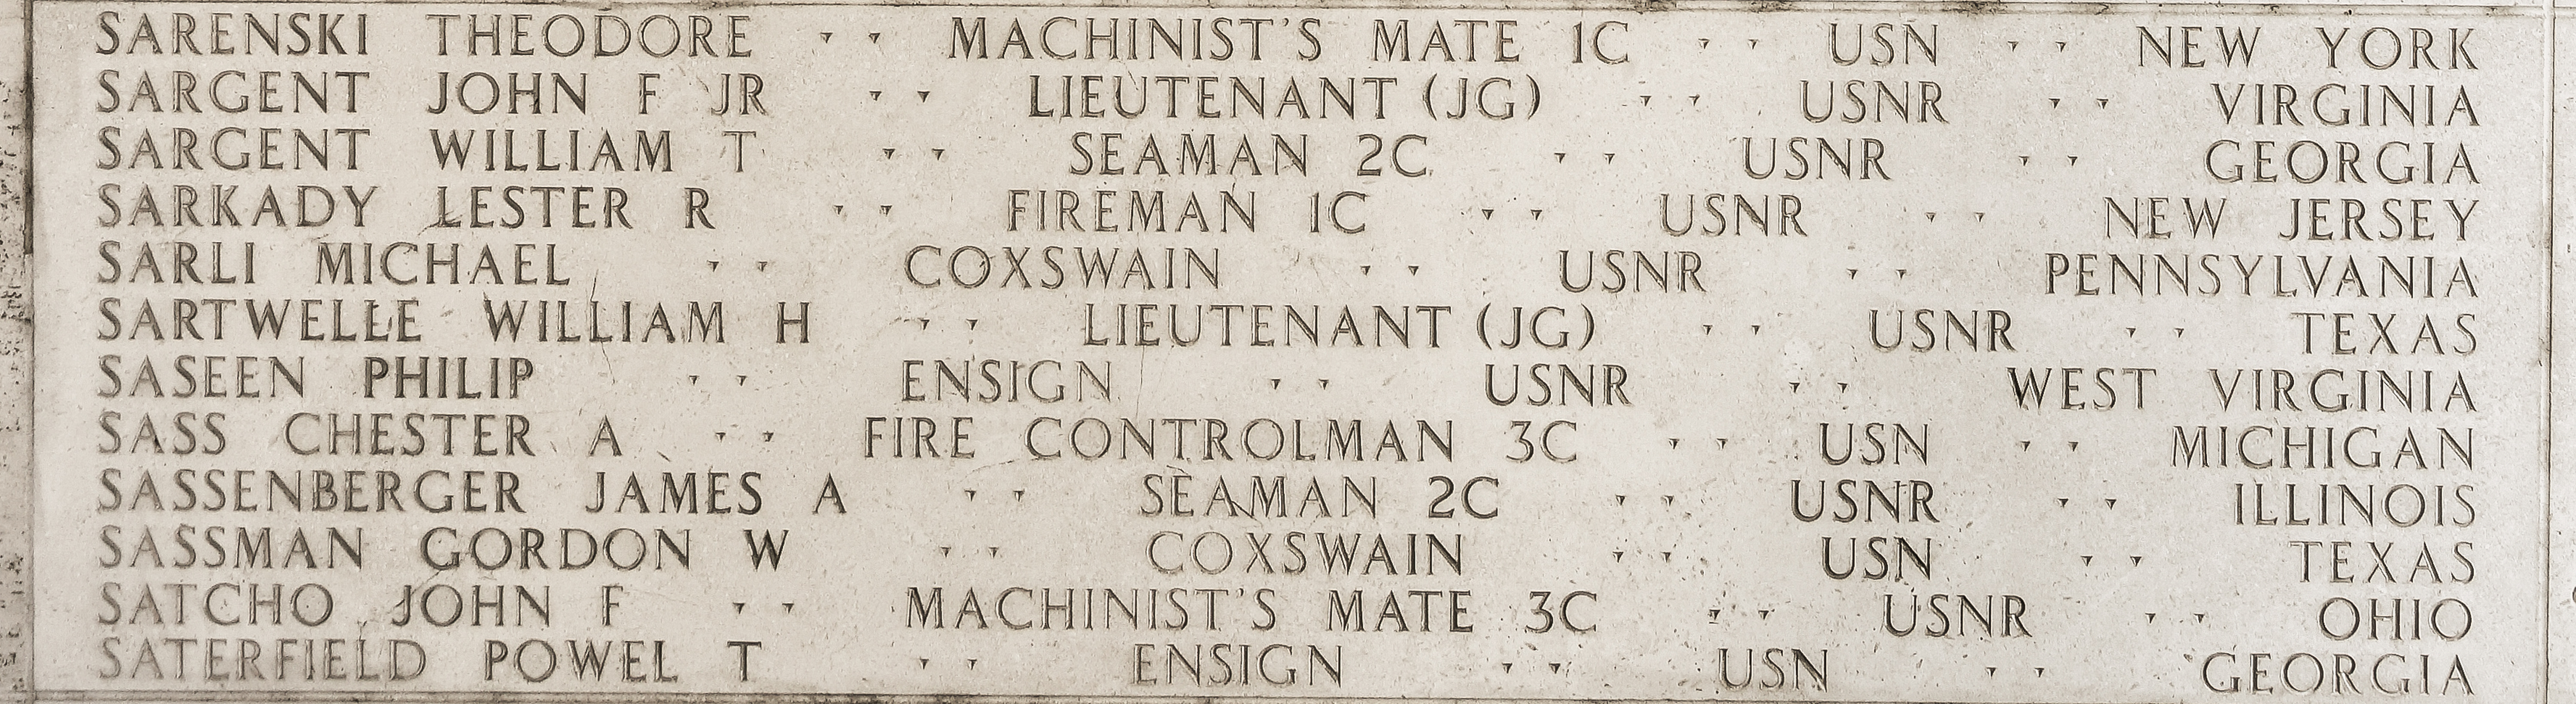 Gordon W. Sassman, Coxswain